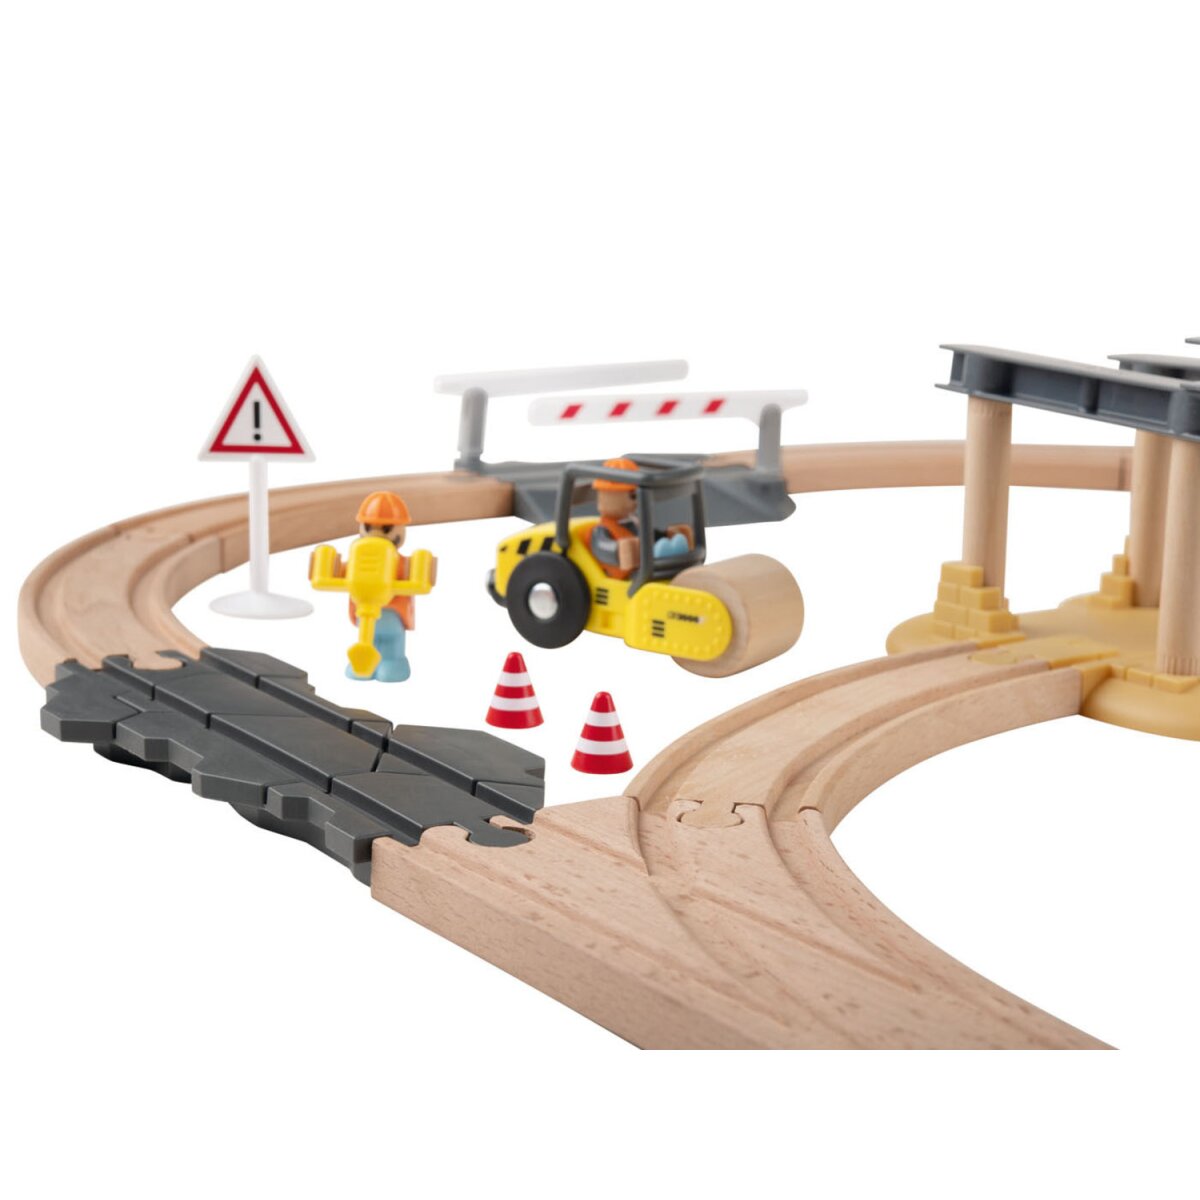 Playtive Holz-Eisenbahn-Set Baustelle, mit Buchenholz - B-Ware gut, 24,99 € | Holzspielzeuge